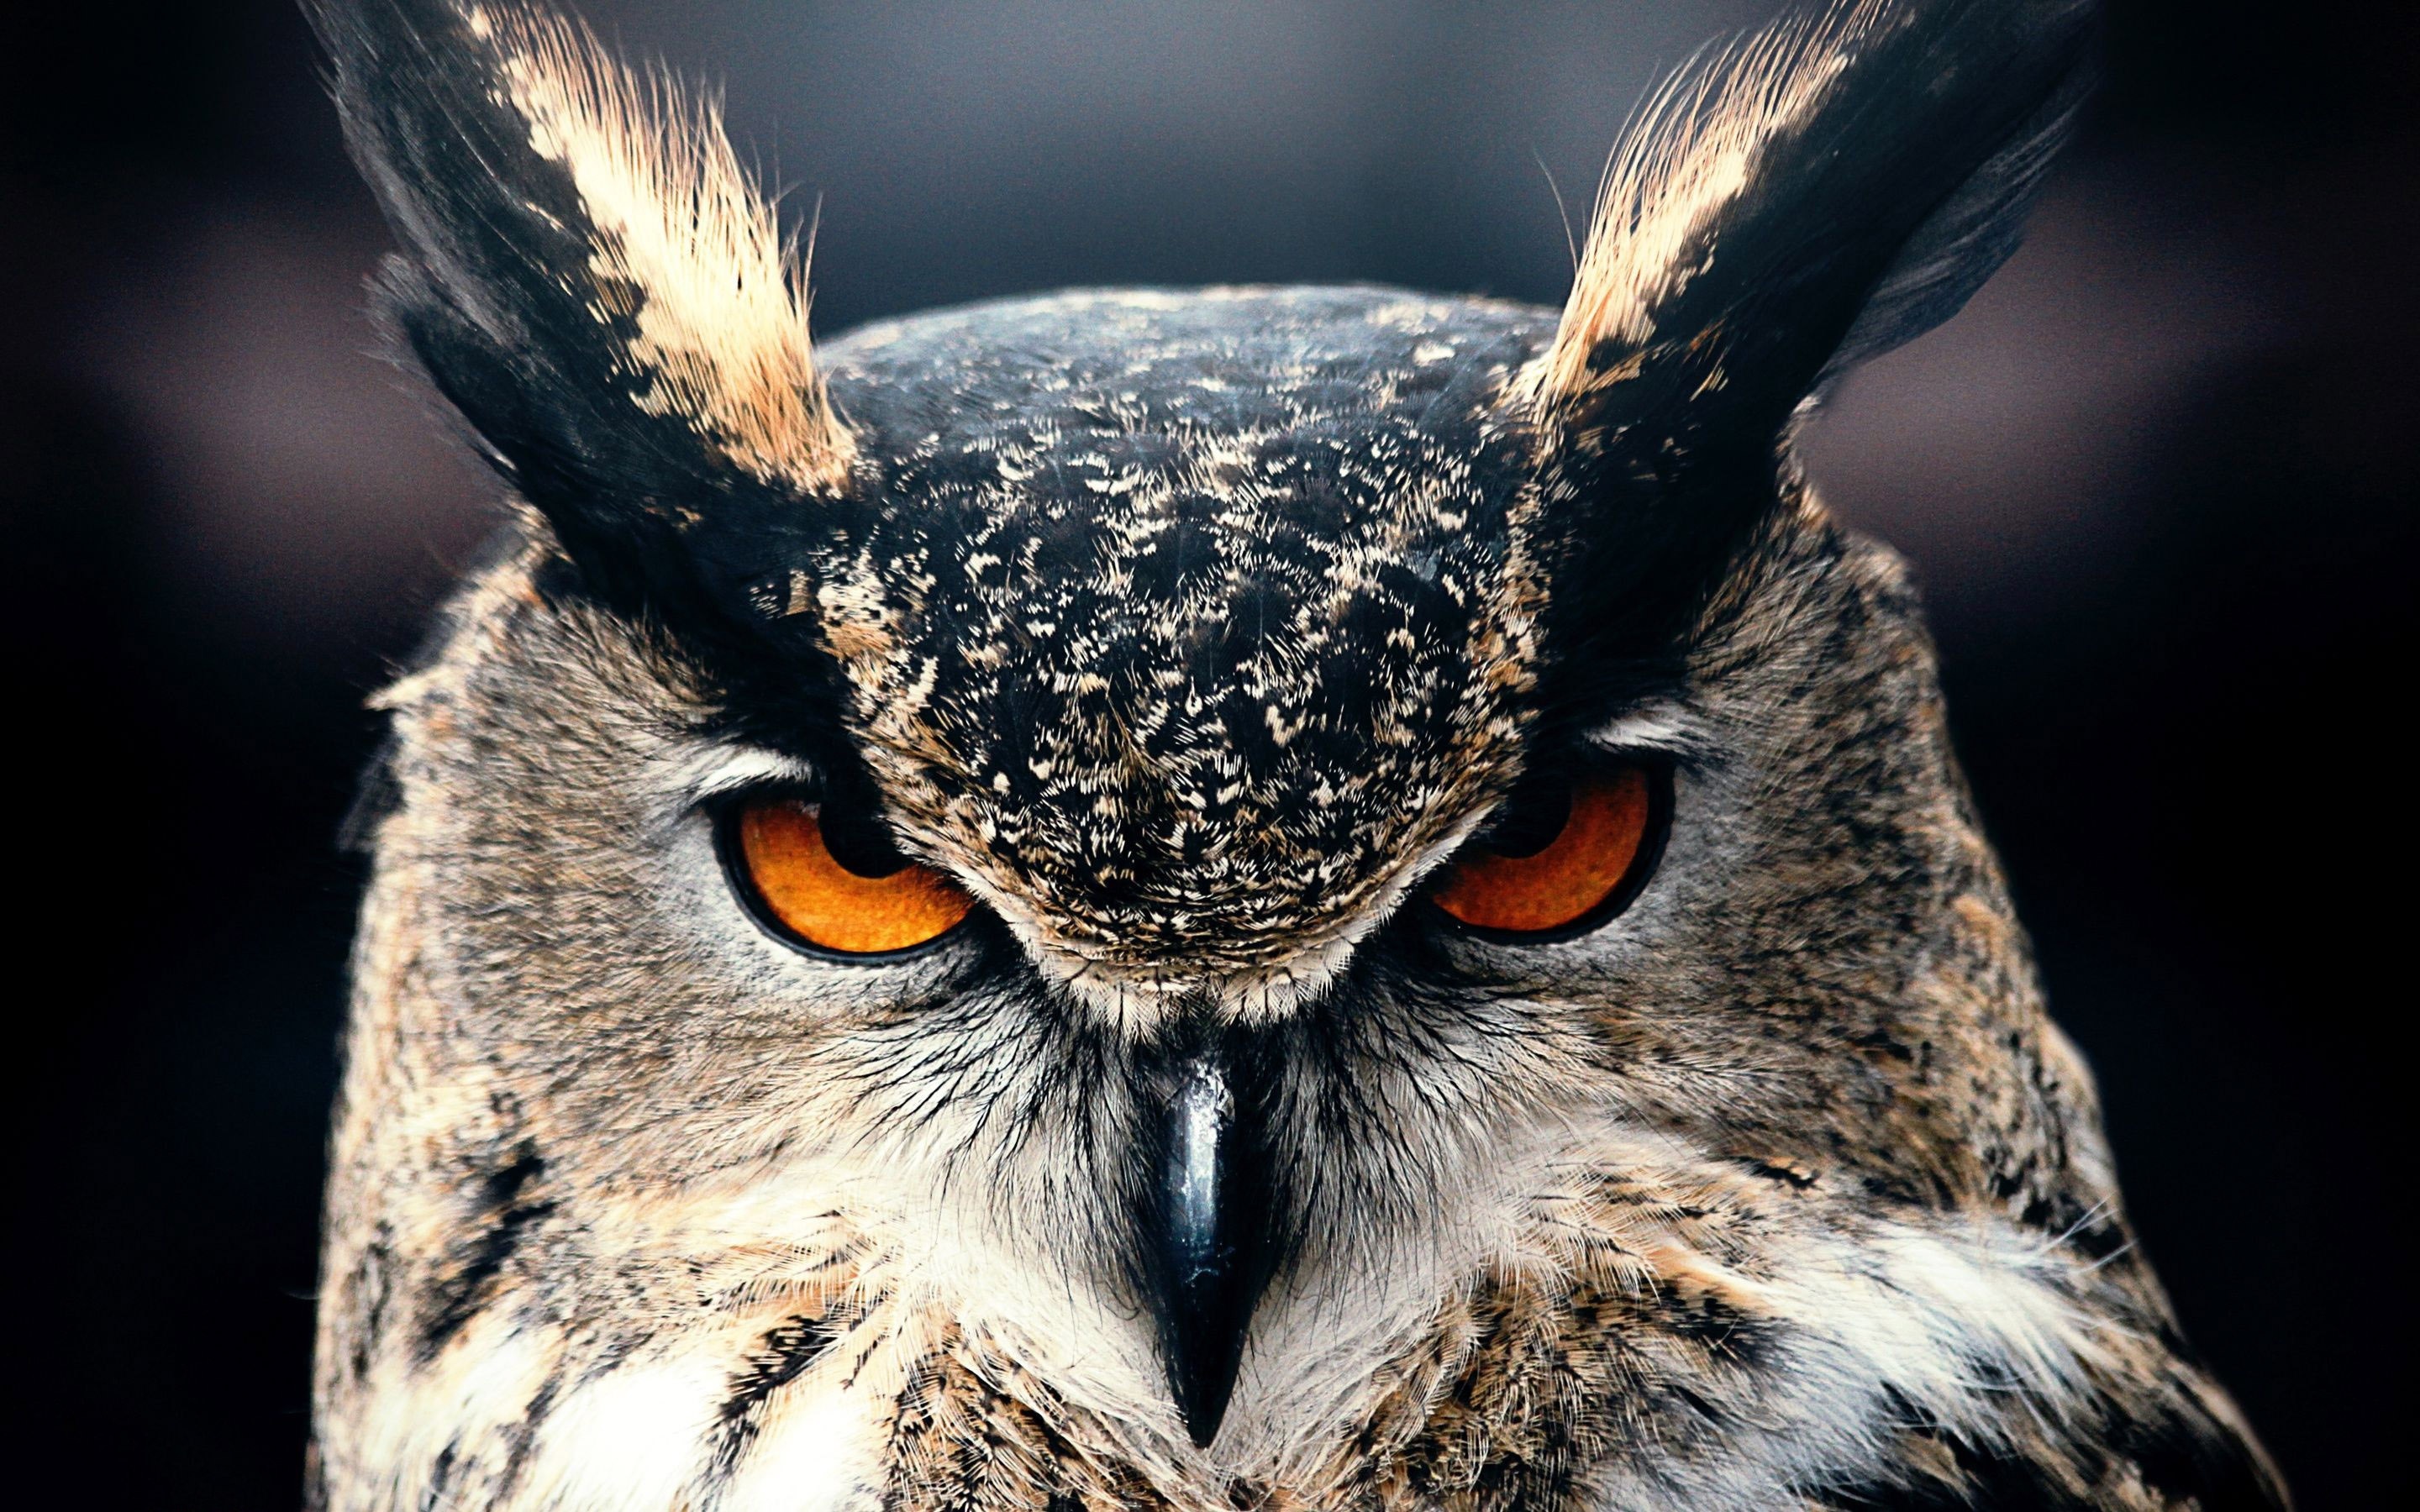 Owl Desktop